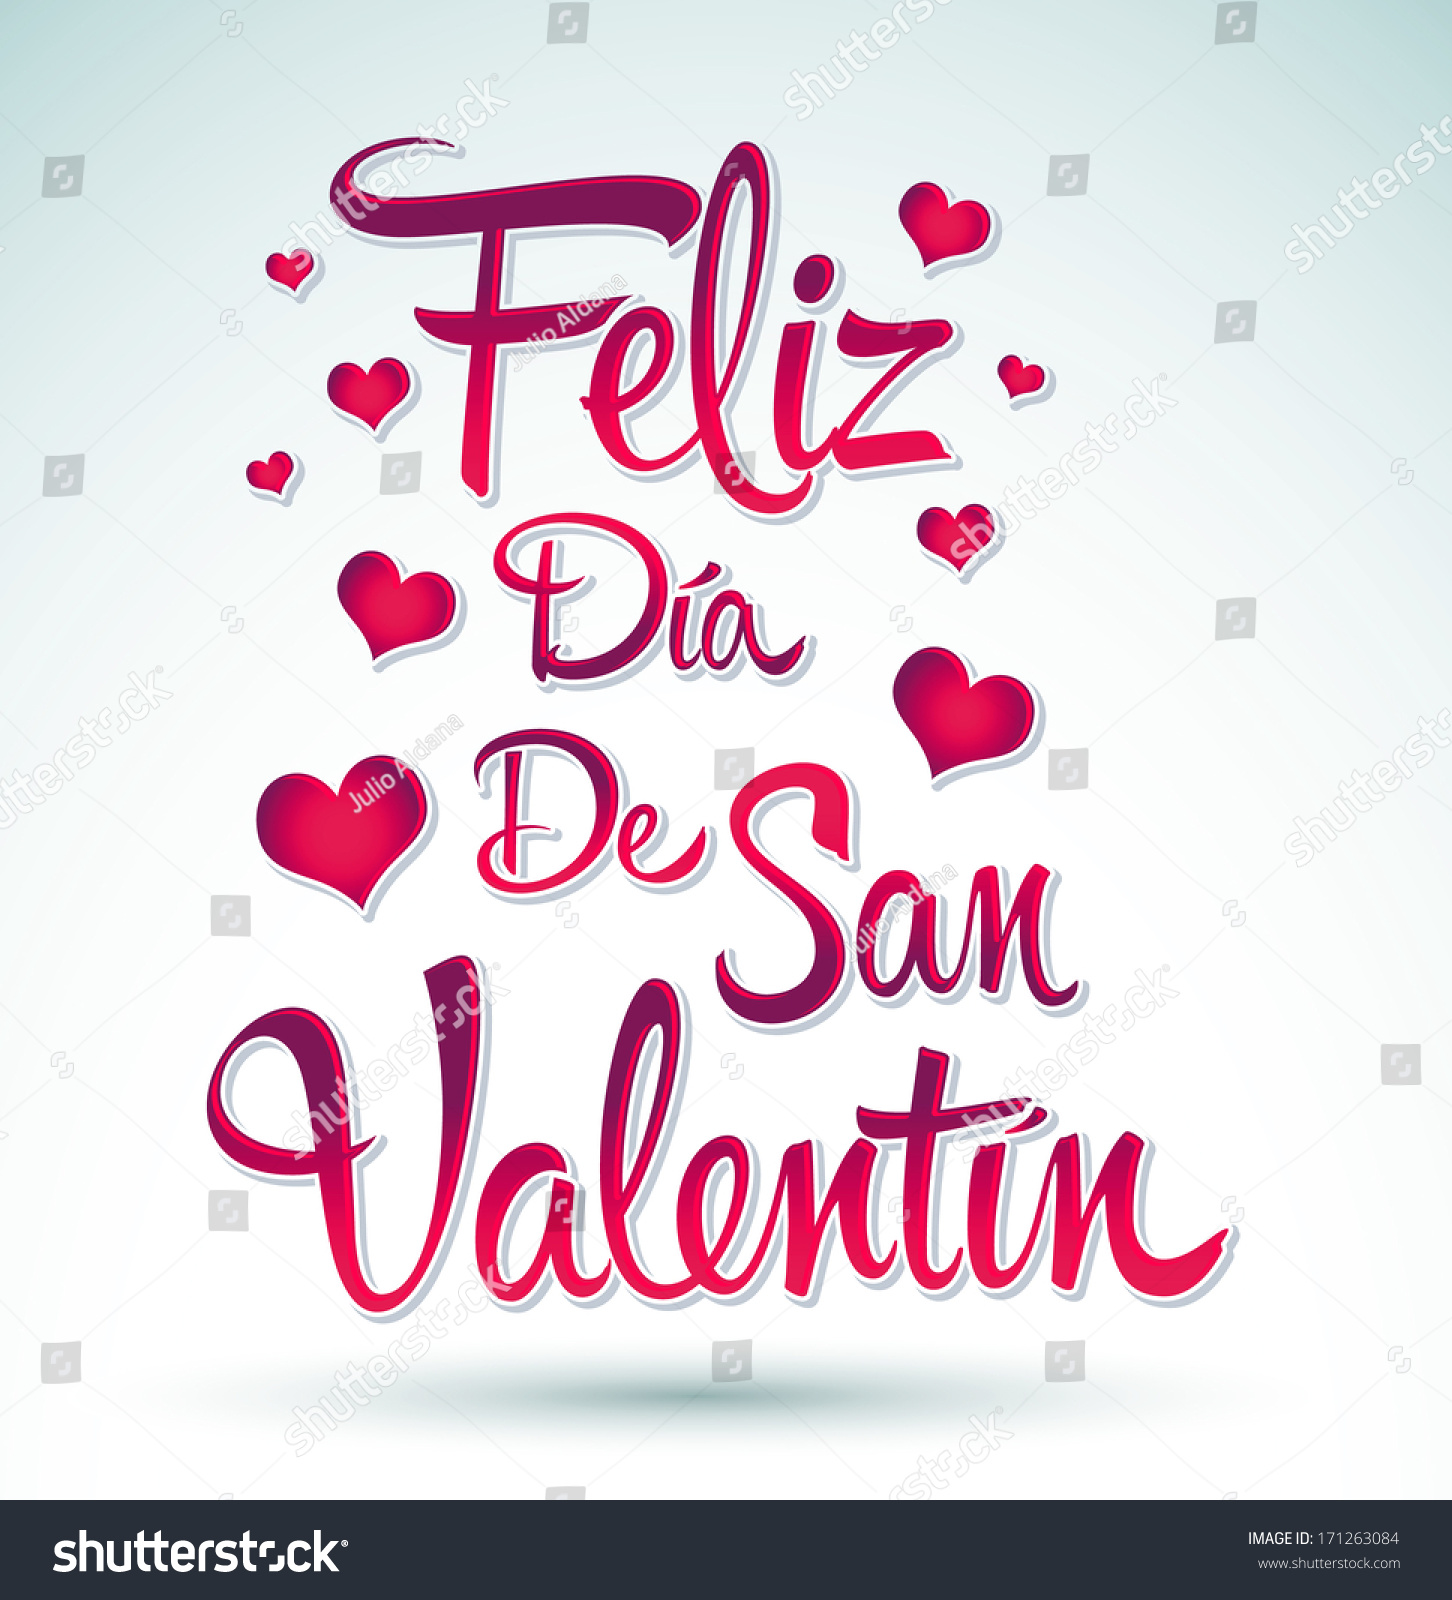  de San Valentin  Happy Valentines day spanish text  vector lettering